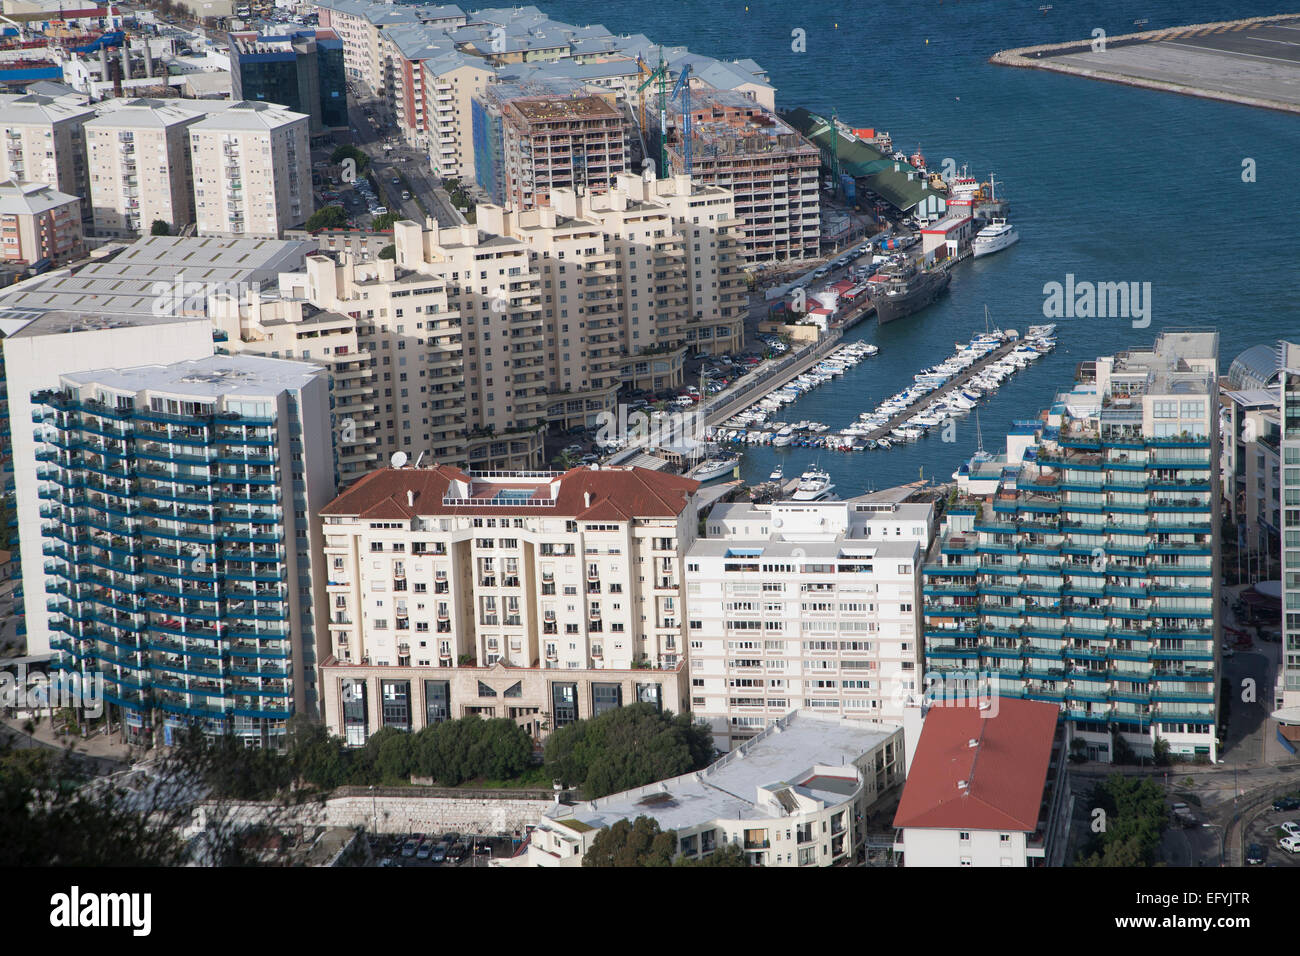 High density modern apartment block housing, Gibraltar, British overseas territory in southern Europe Stock Photo